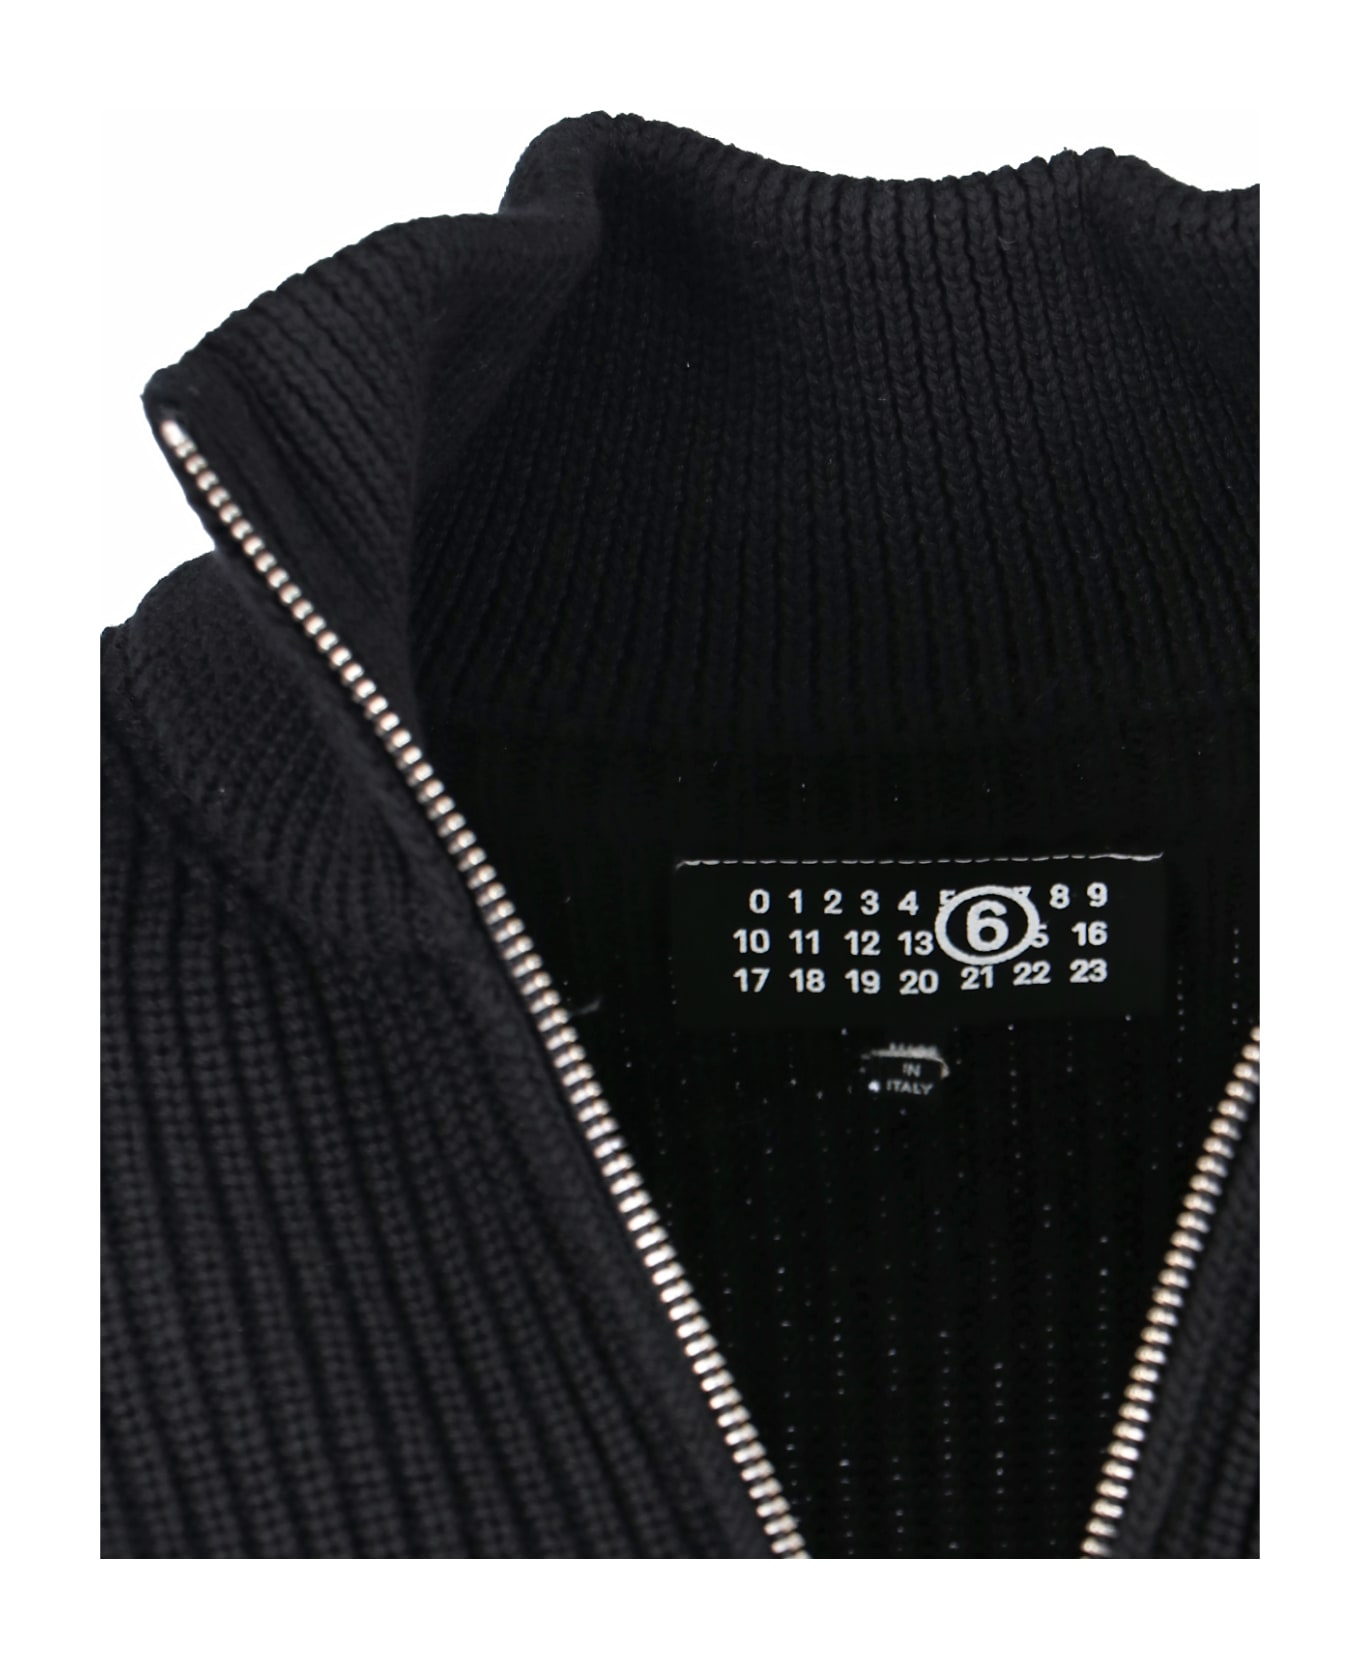 MM6 Maison Margiela Zip Sweater - Black  